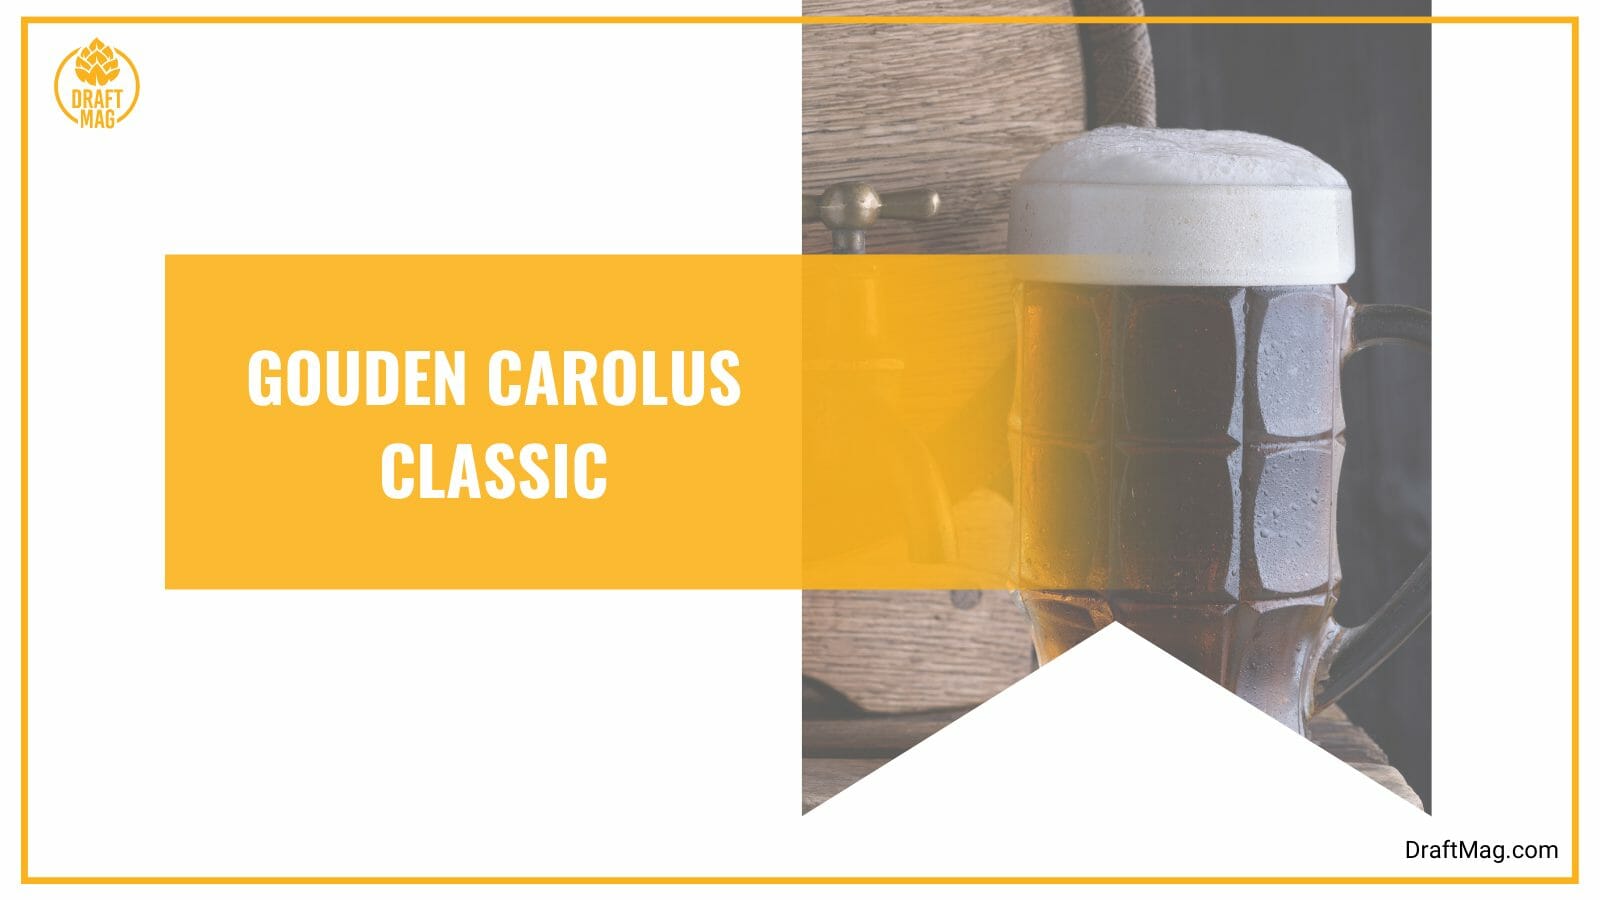 Gouden carolus classic dark beer